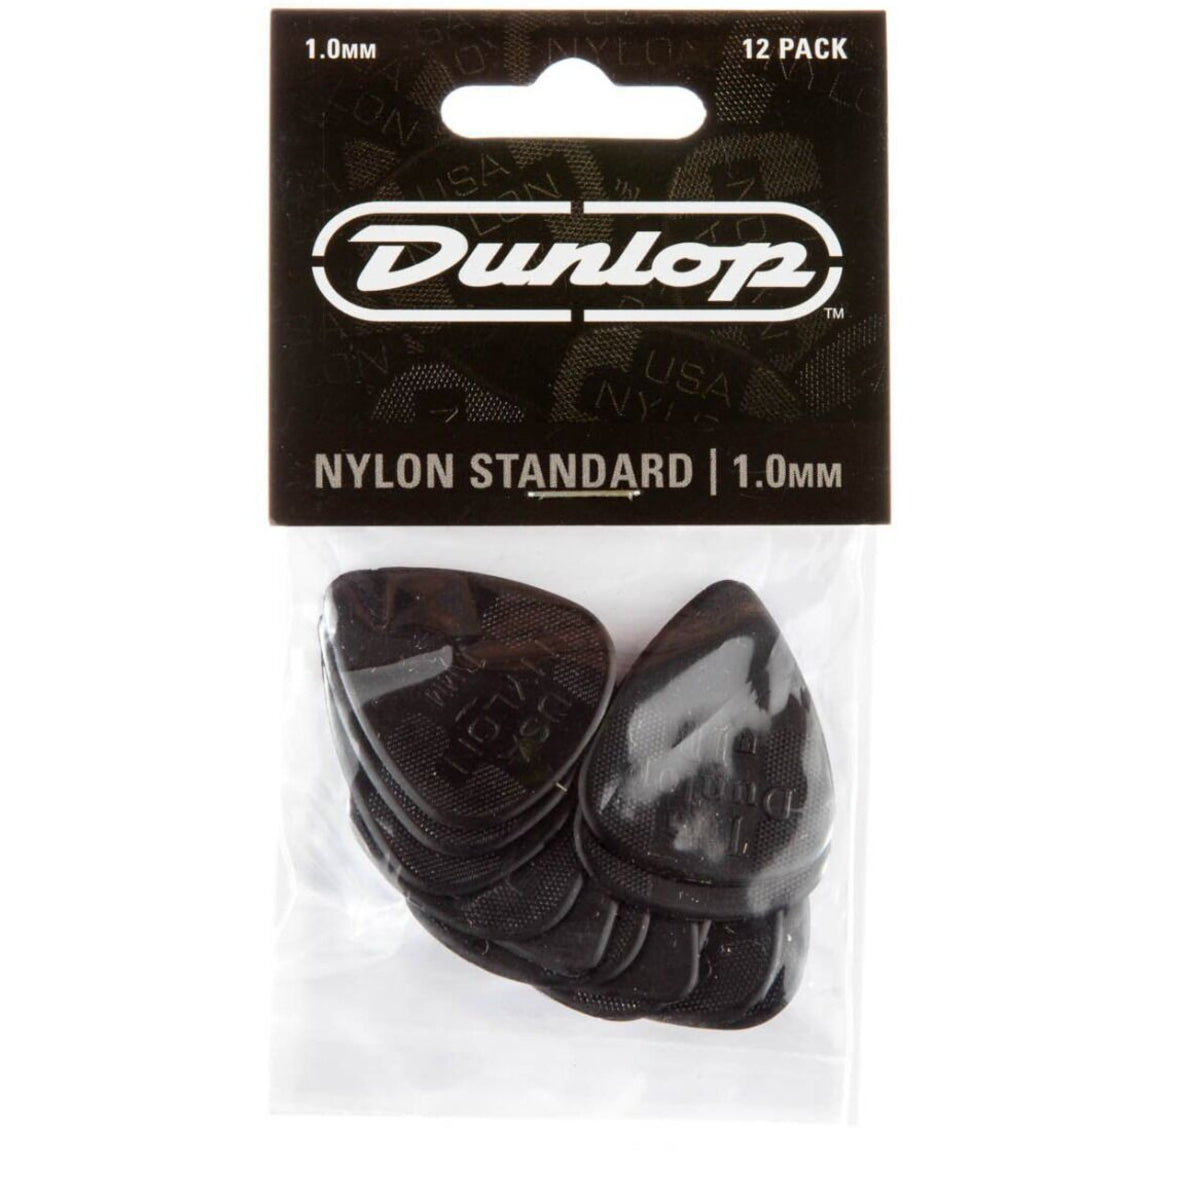 Dunlop 44p10 Nylon Standard 1.0 Black Guitar Picks - 12 PACK